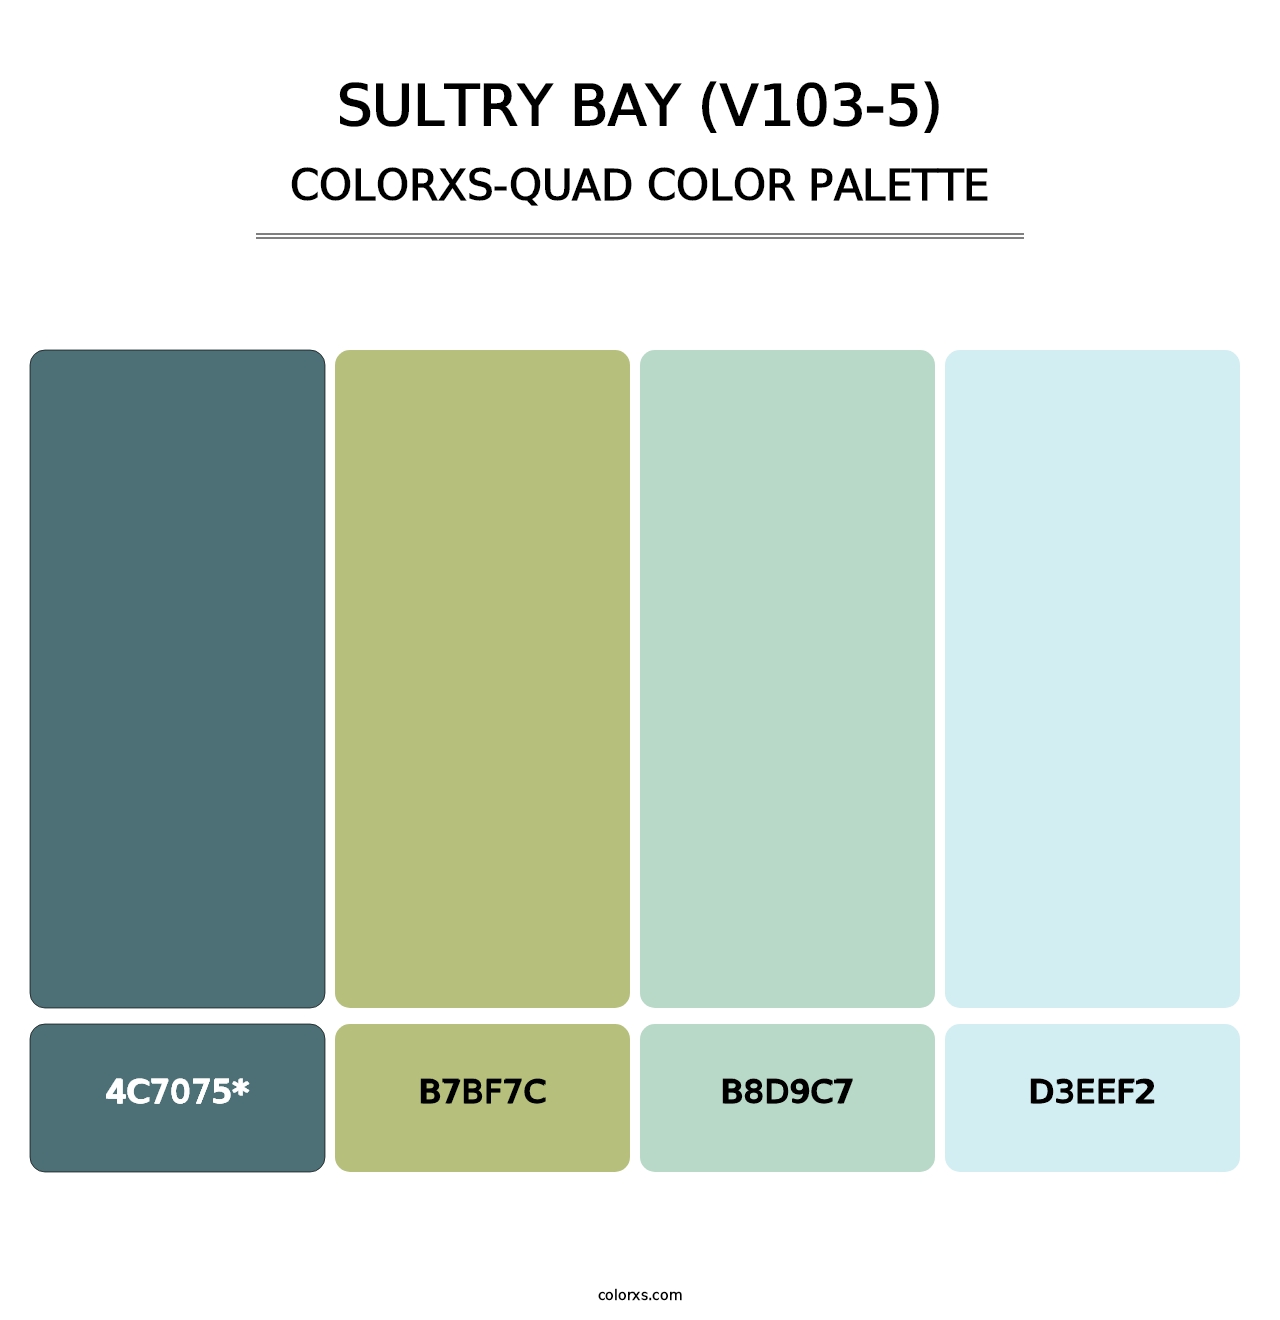 Sultry Bay (V103-5) - Colorxs Quad Palette